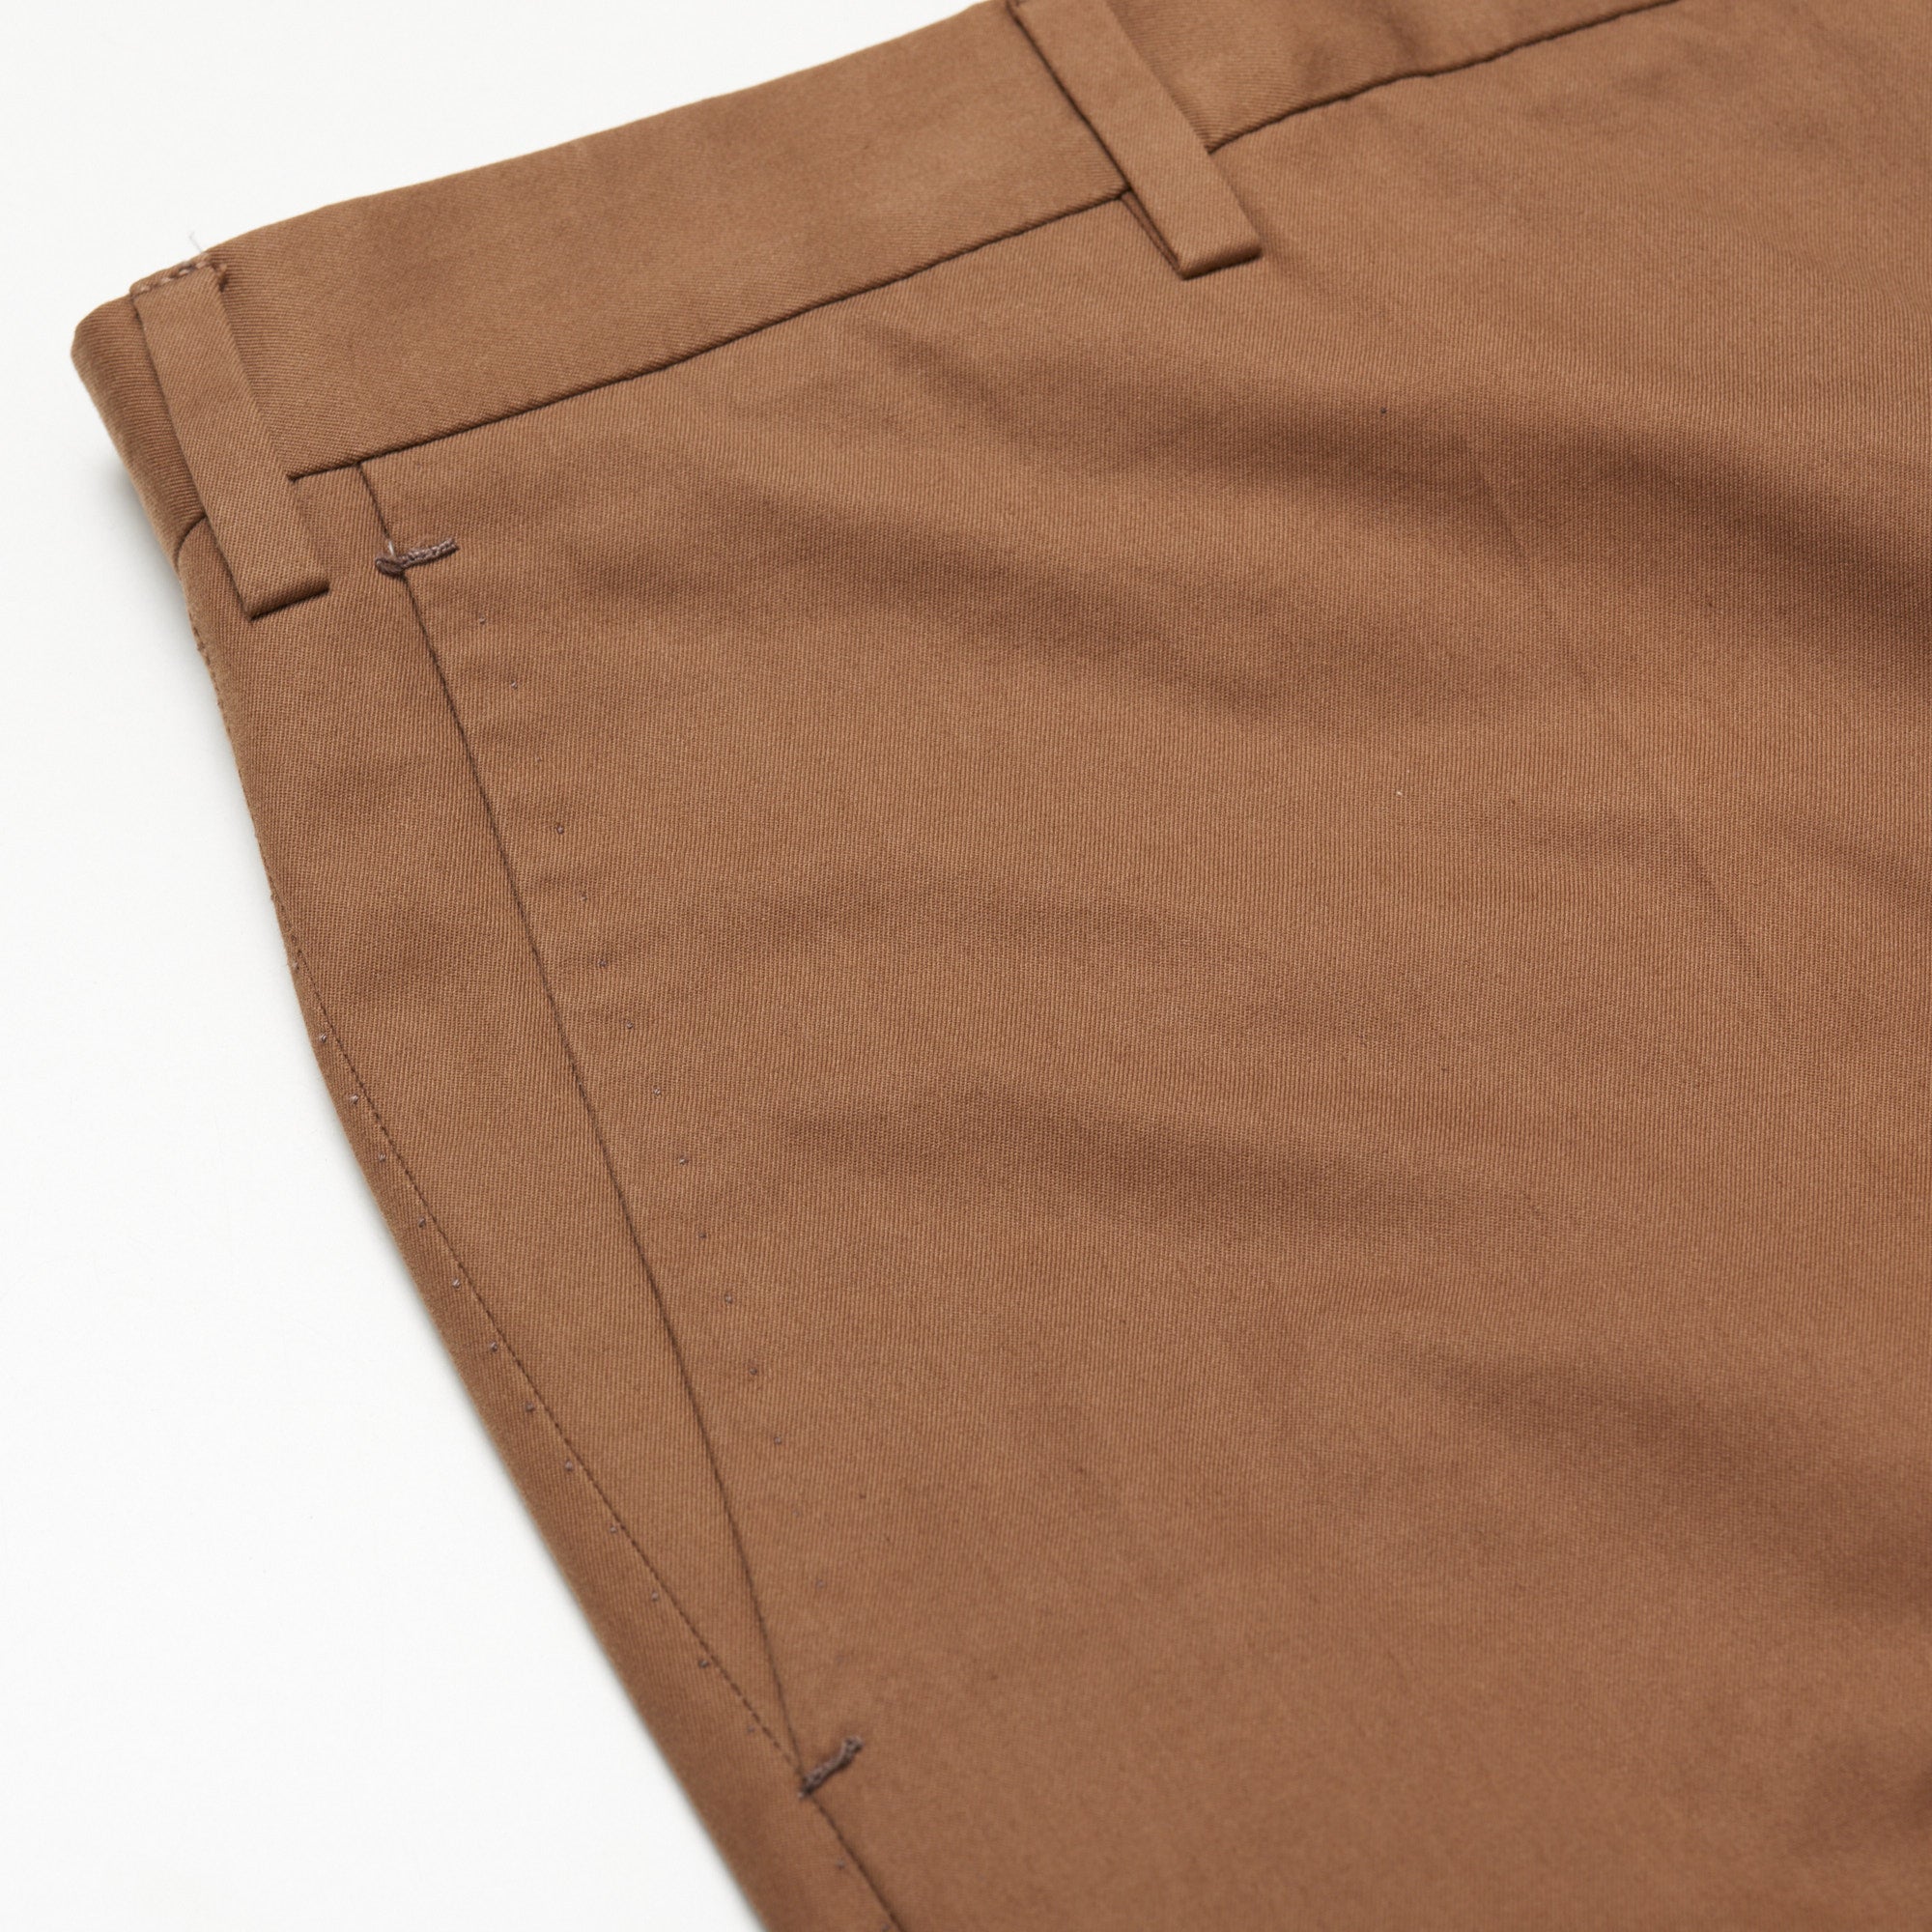 DONNANNA Handmade “Lazio” Brown Twill Cotton Flat Front Dress Pants EU 50 US 34 DONNANNA